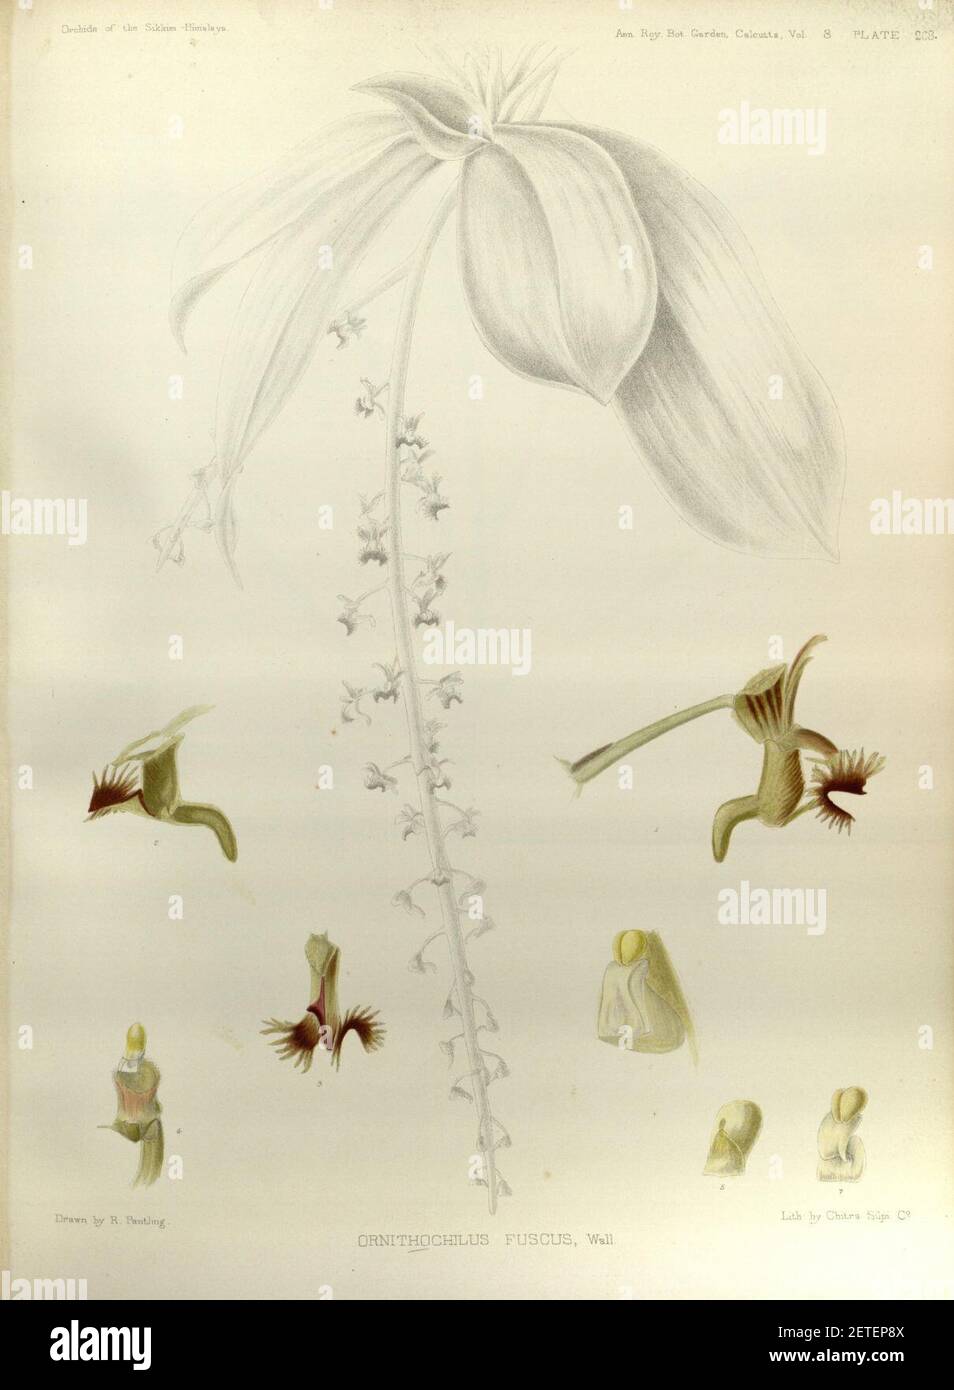 Phalaenopsis difformis var. difformis (as Ornithochilus fuscus) - The Orchids of the Sikkim-Himalaya pl 268 (1898). Stock Photo